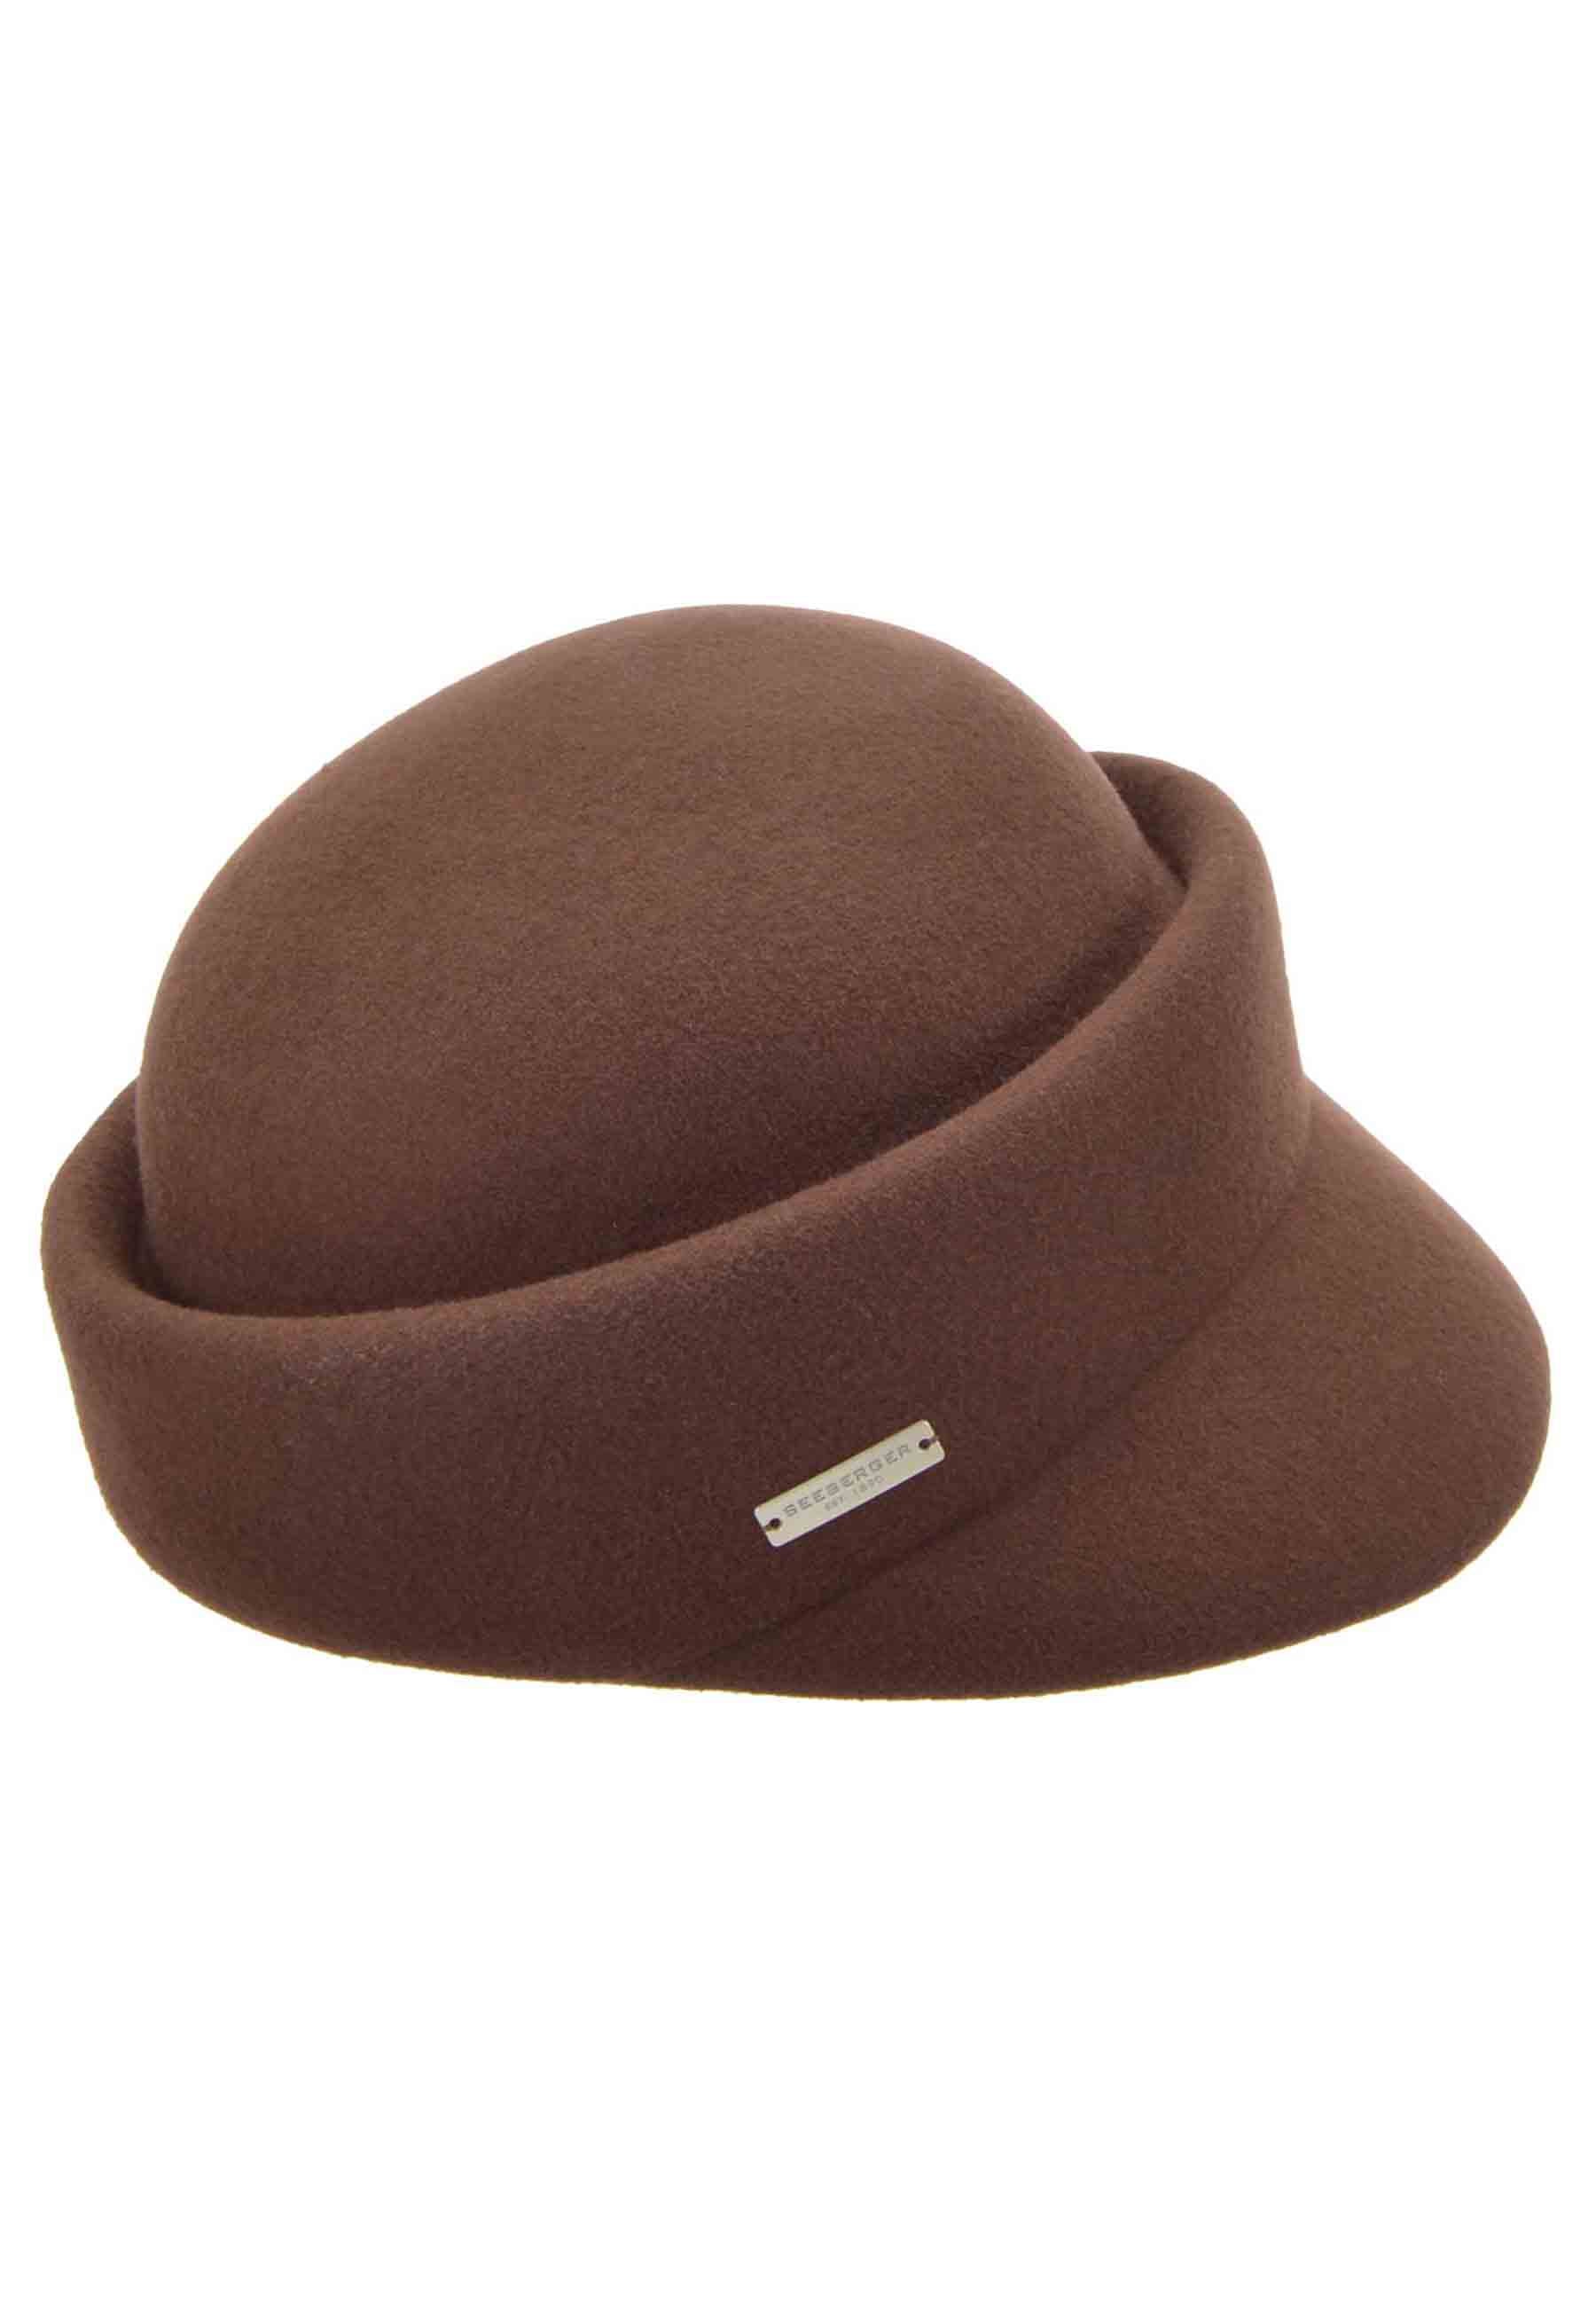 Women's brown wool hat